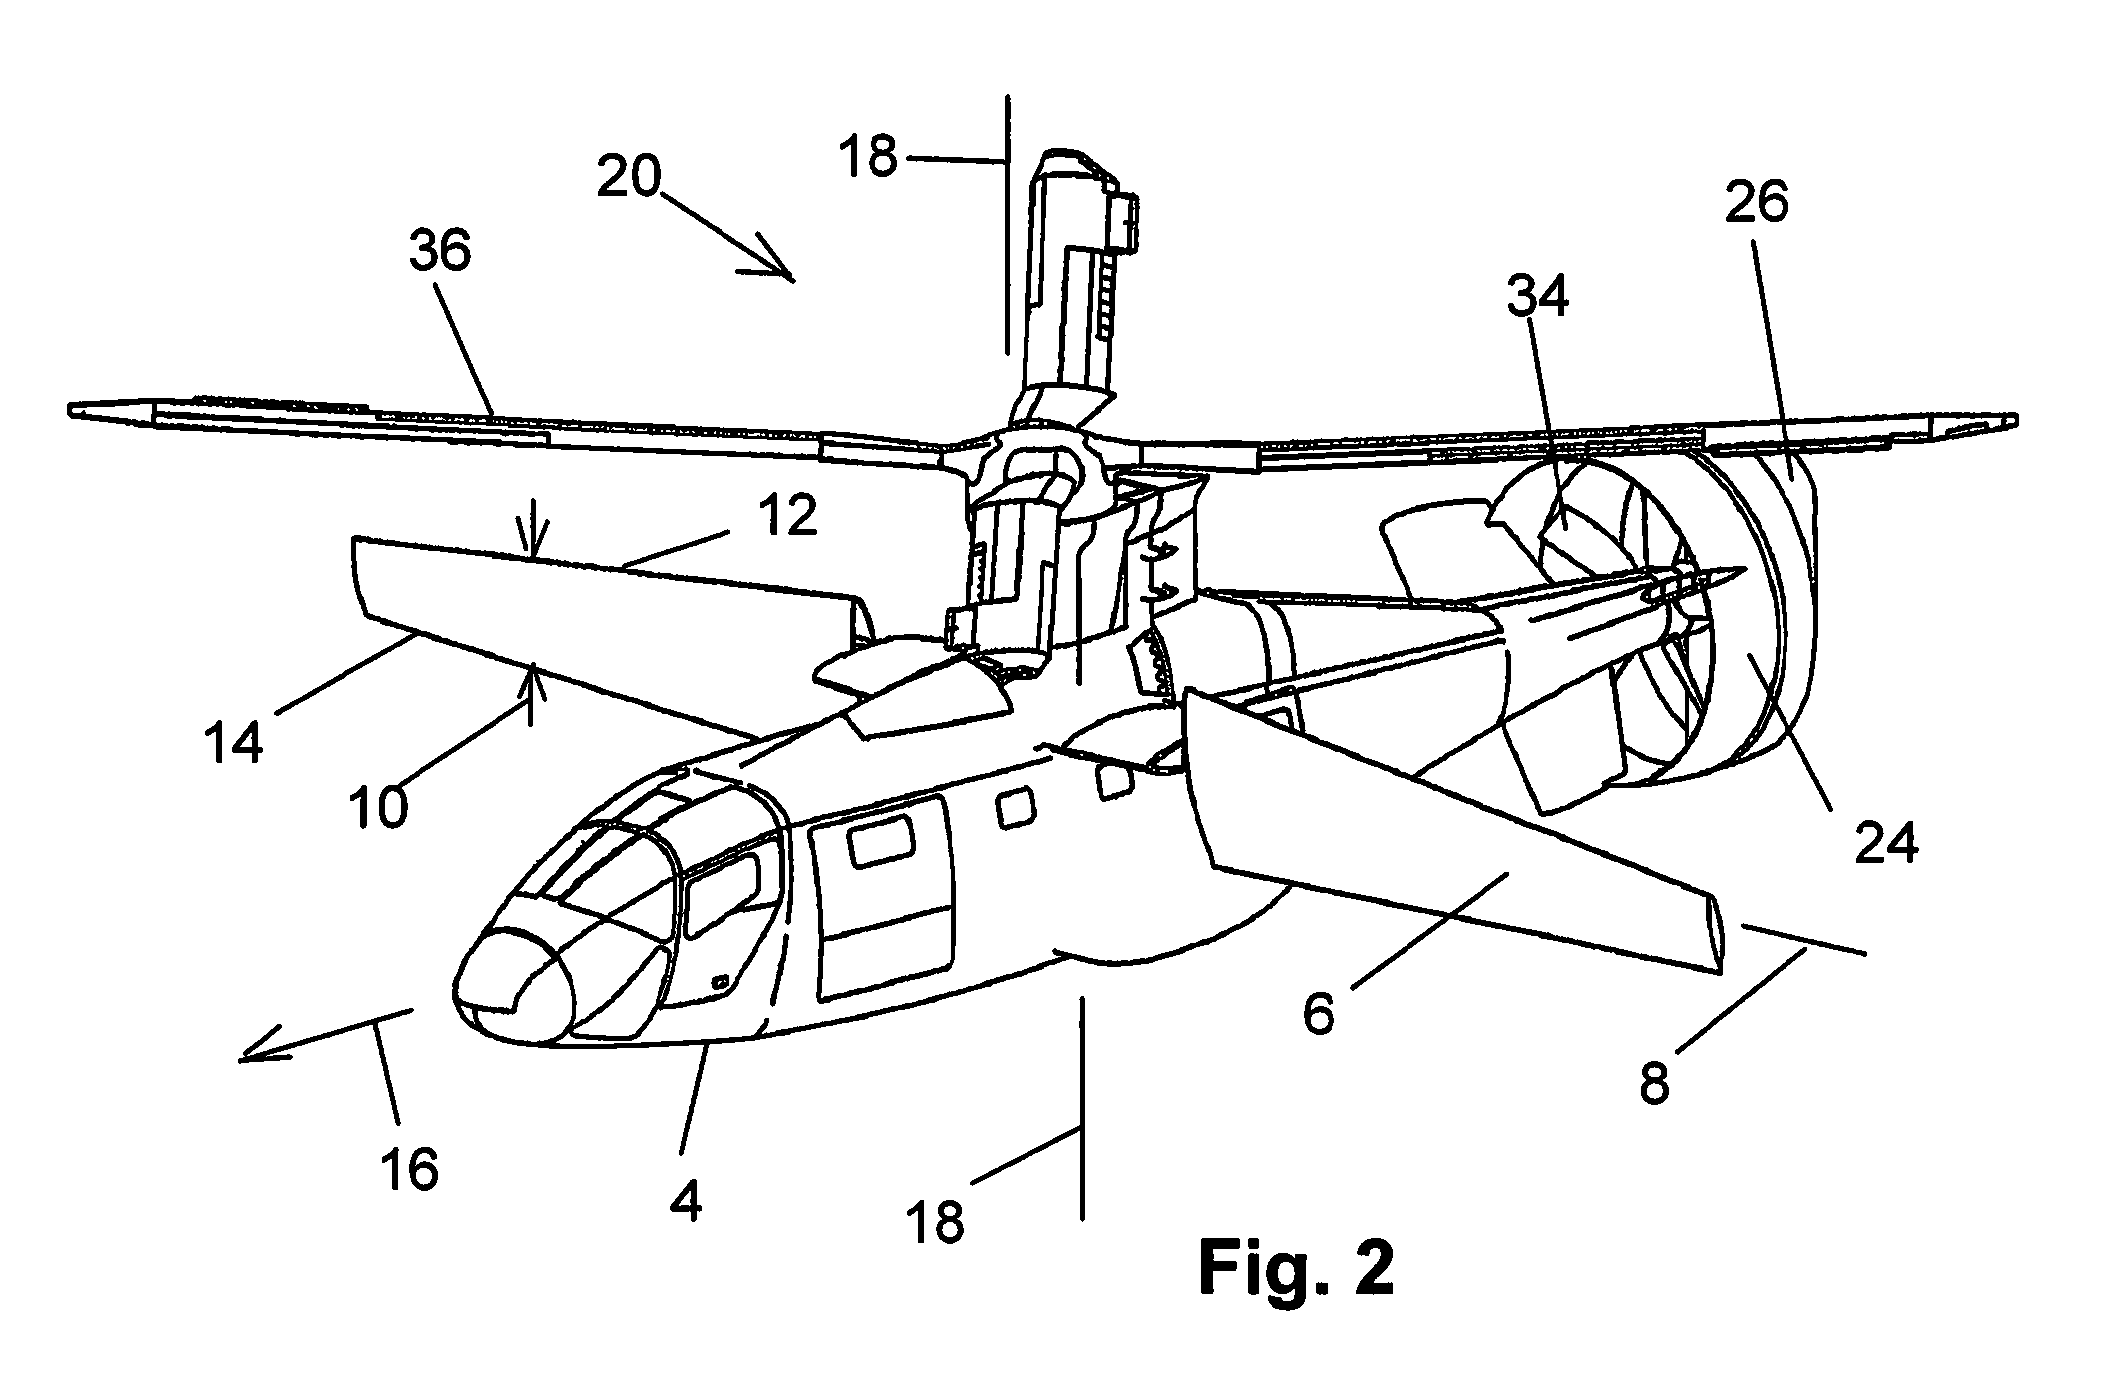 Compound aircraft with autorotation